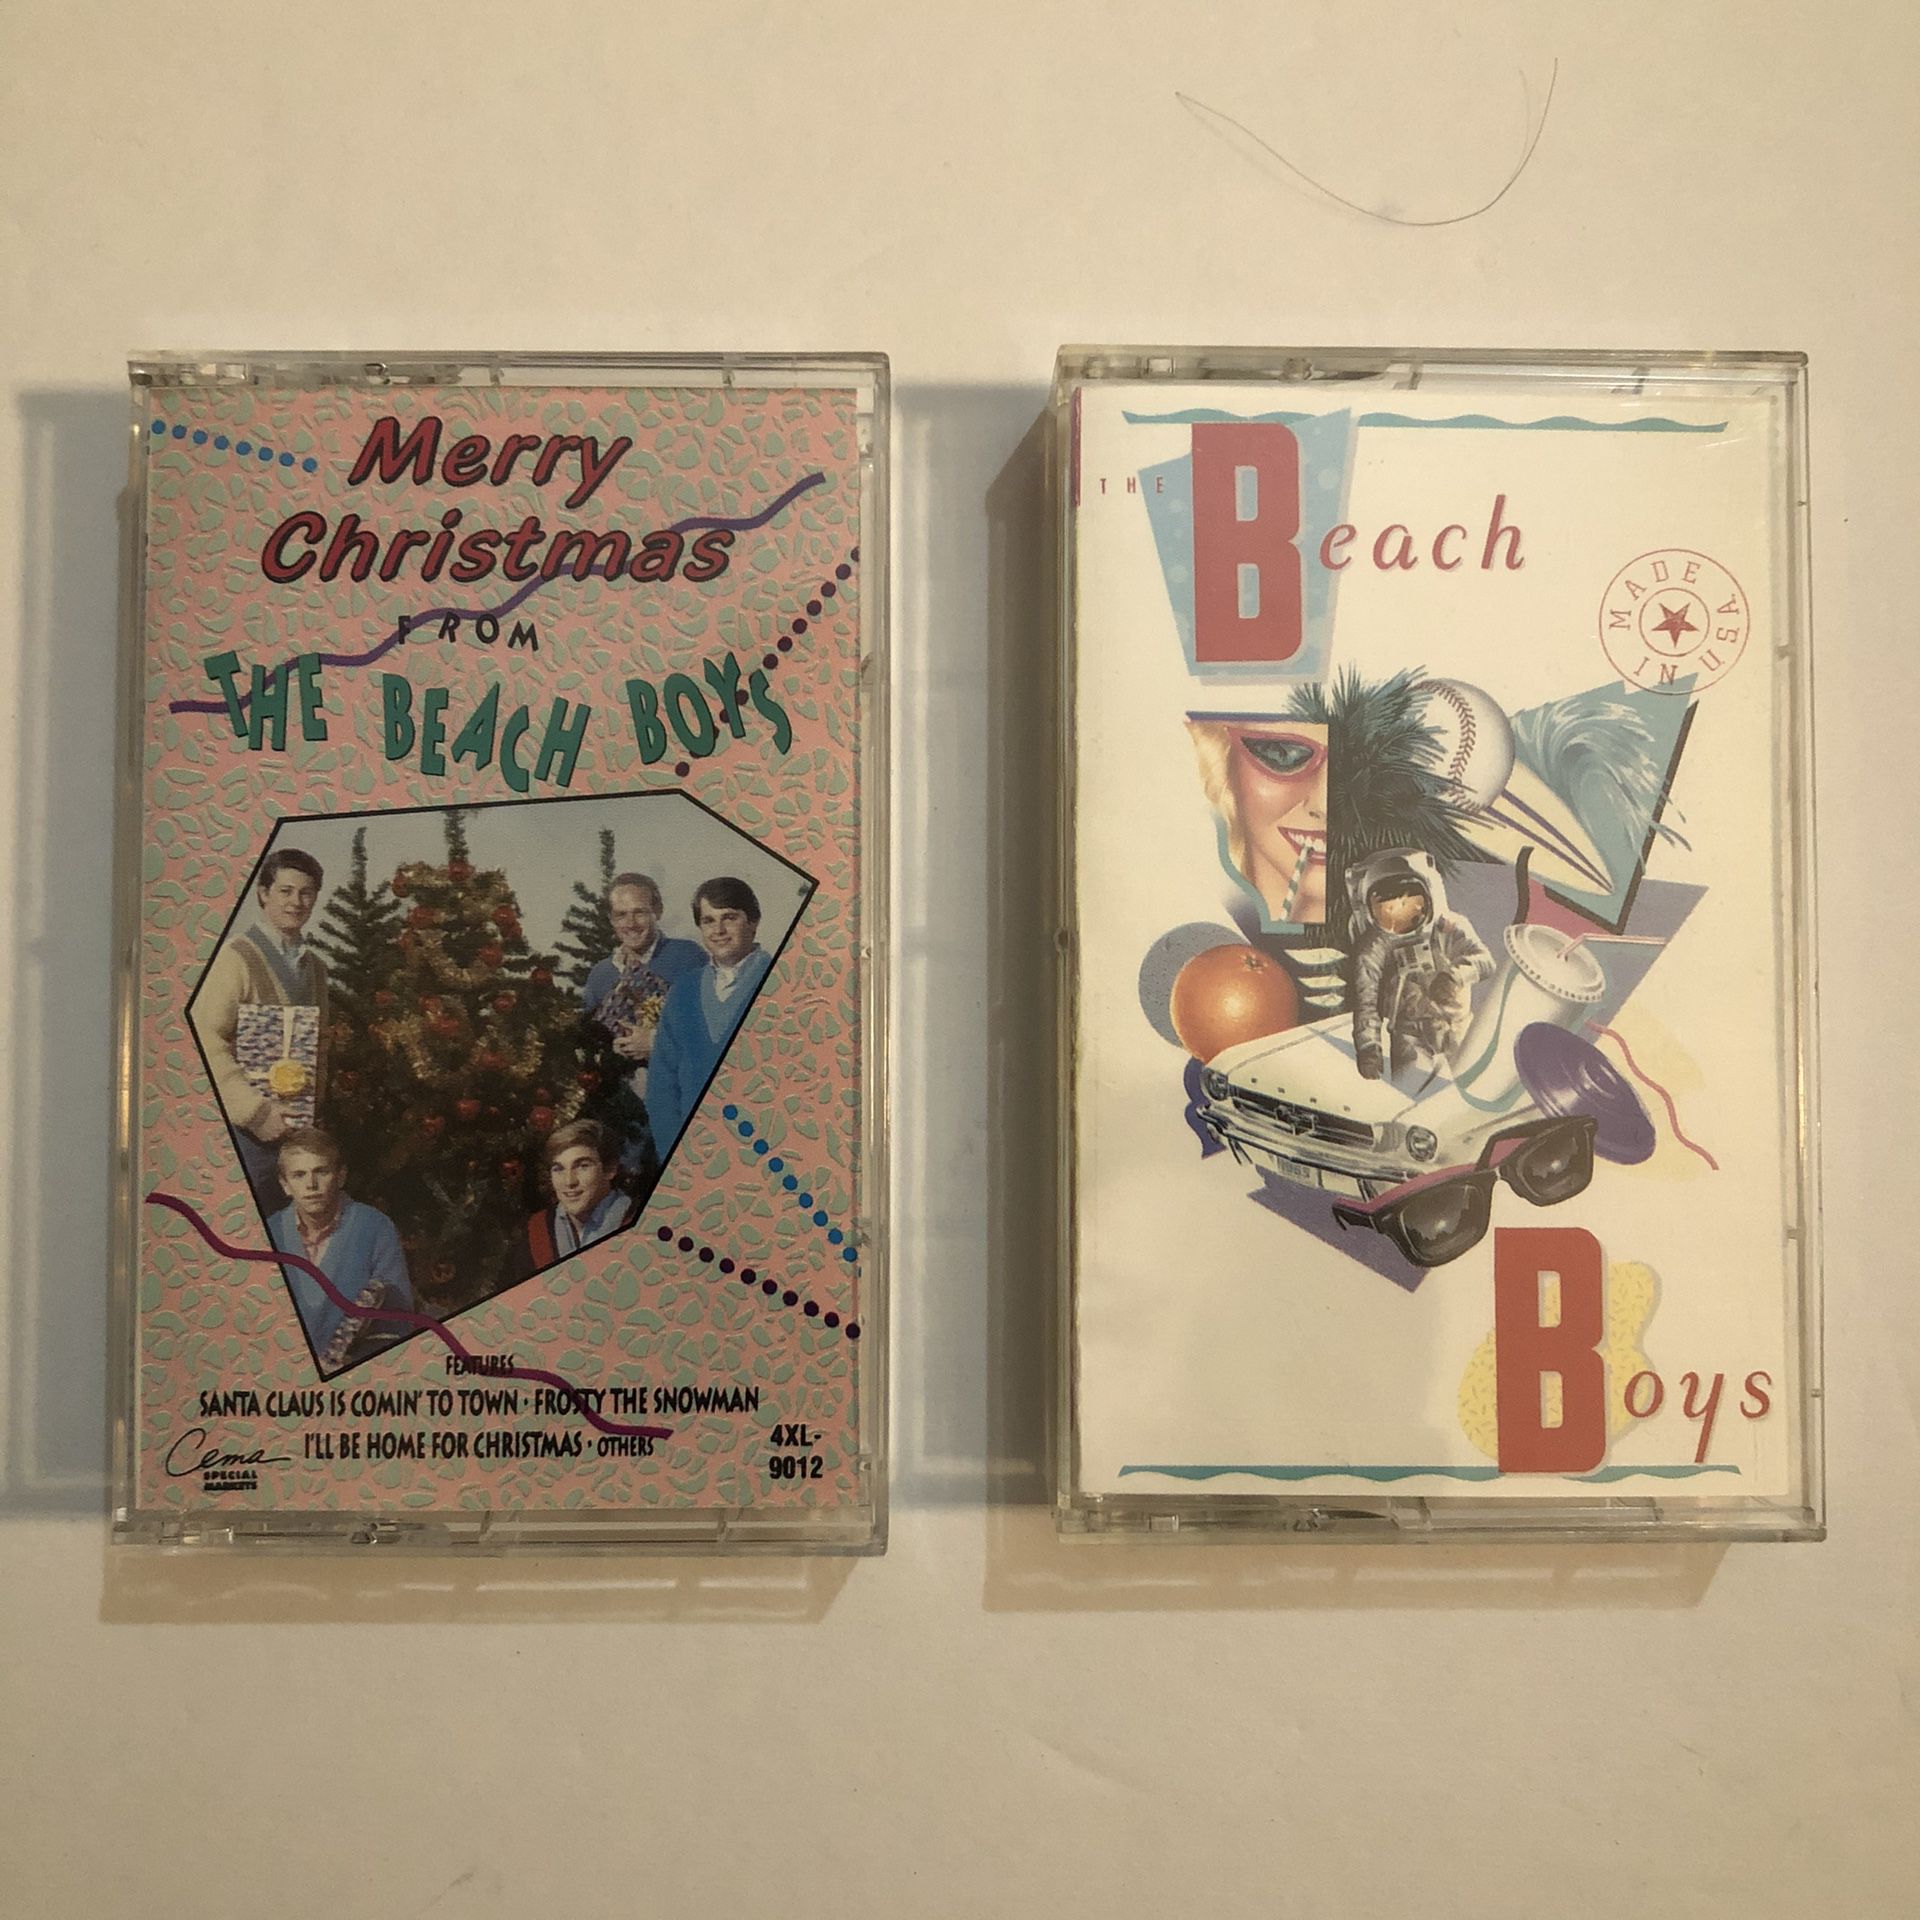 The Beach Boys cassette tapes